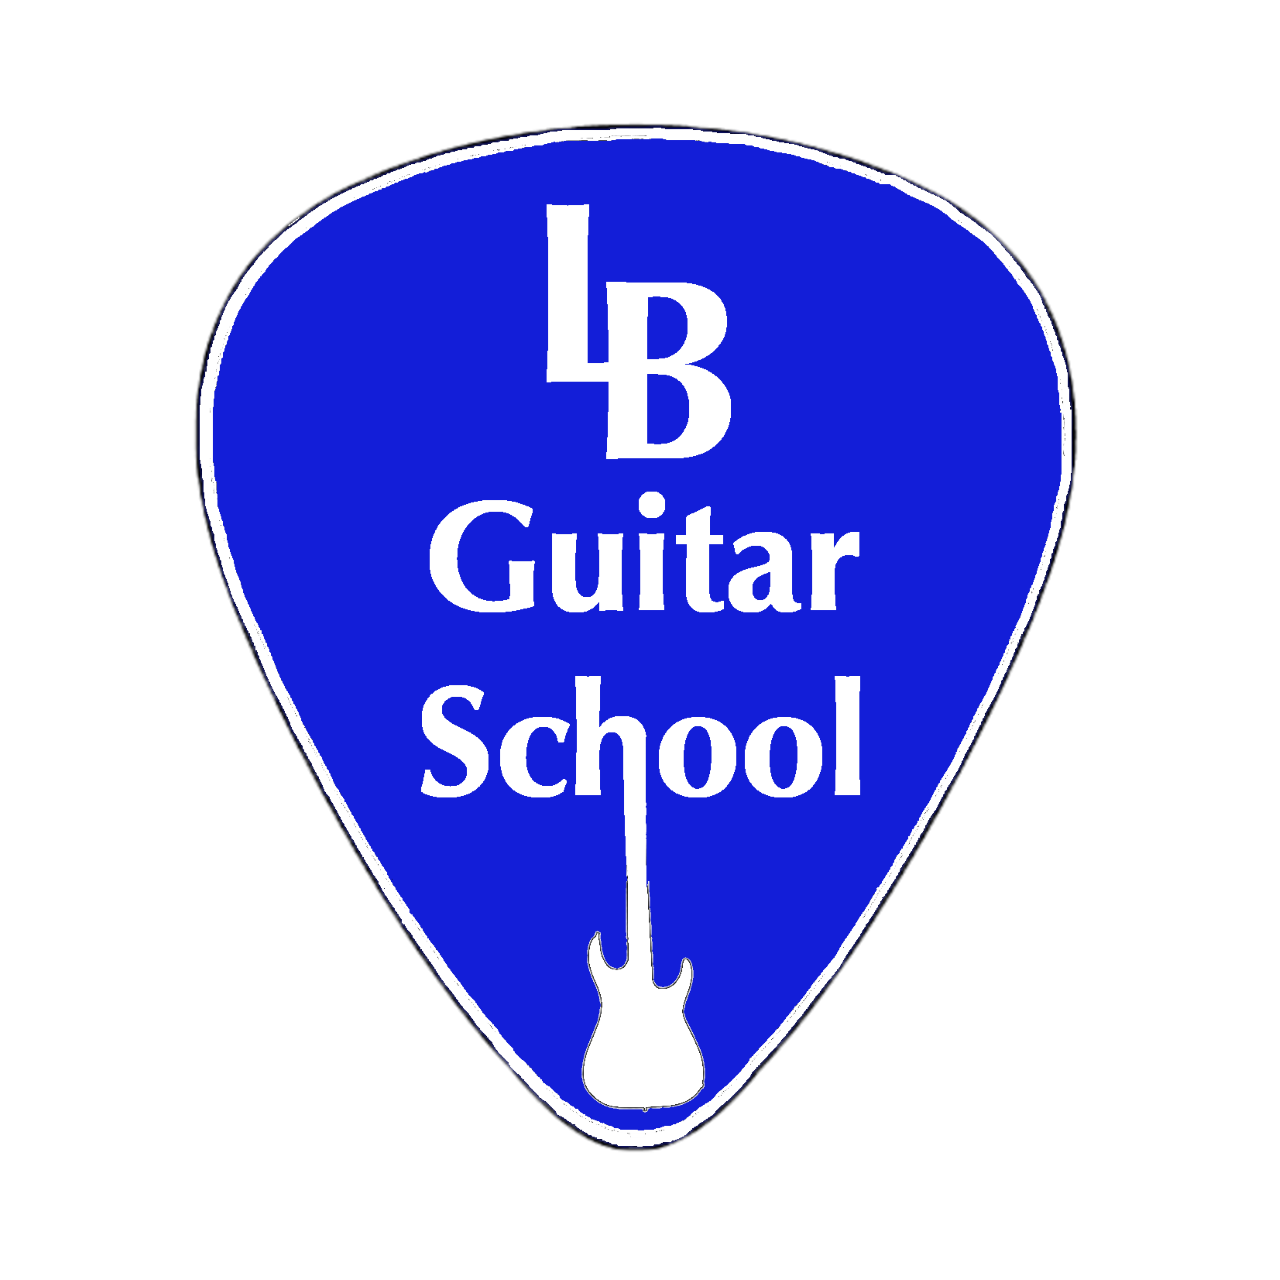 Blue guitar pick with "LB Guitar School" written on it